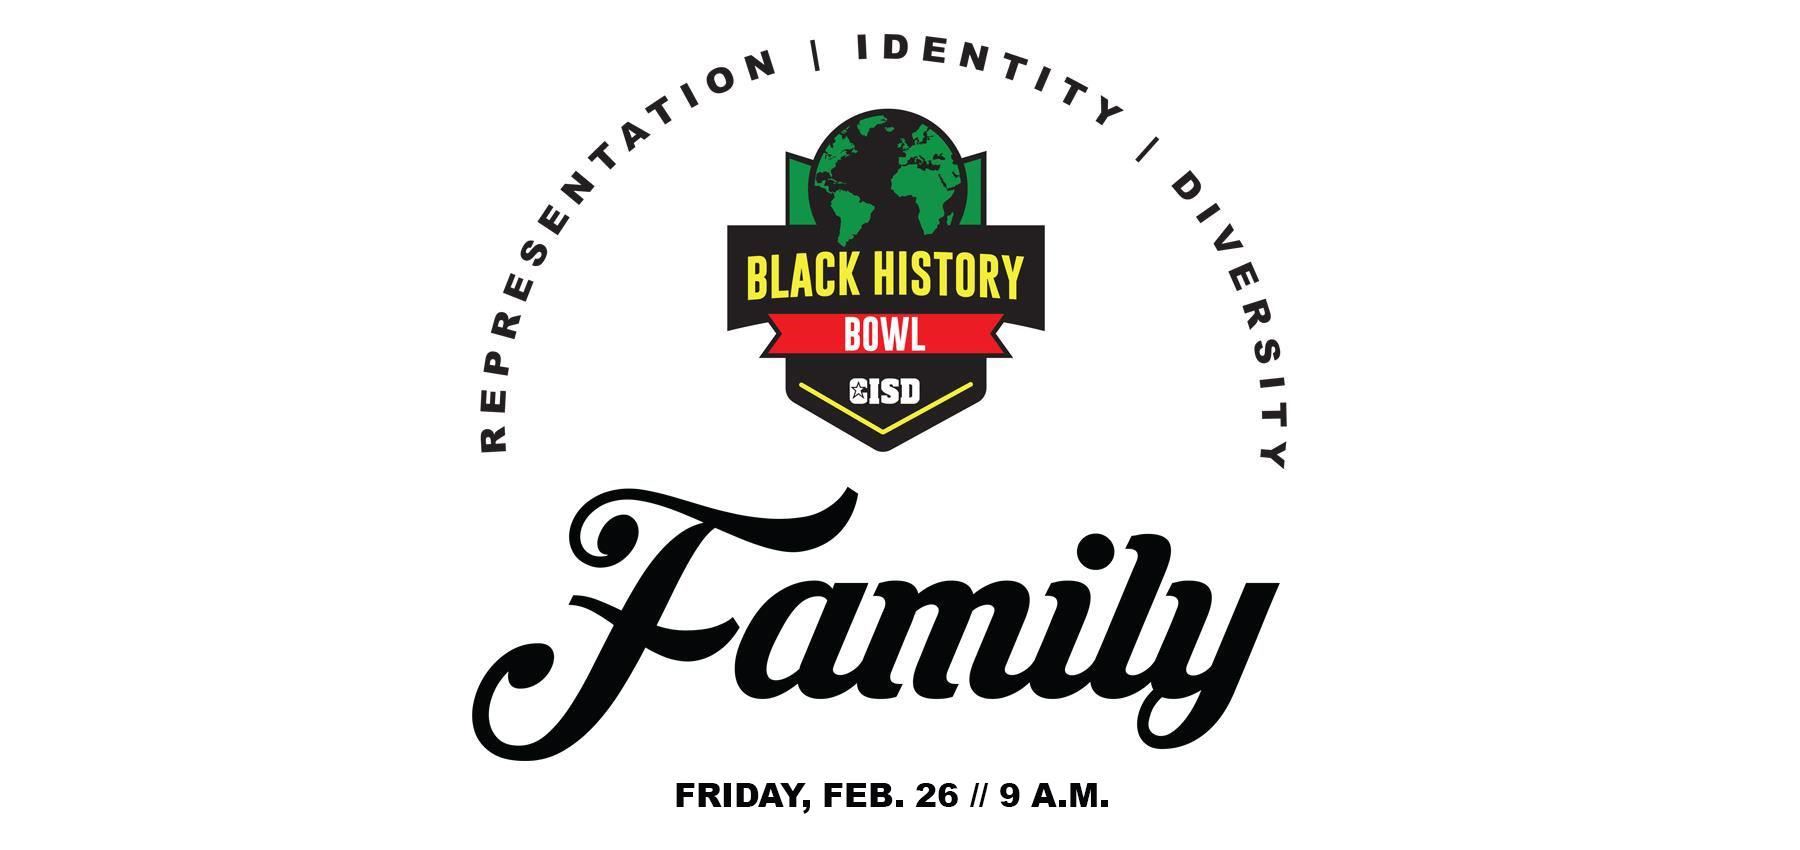 Black History Bowl Banner - Representation | Identity | Diversity on Friday, Feb. 26 at 9 a.m. 